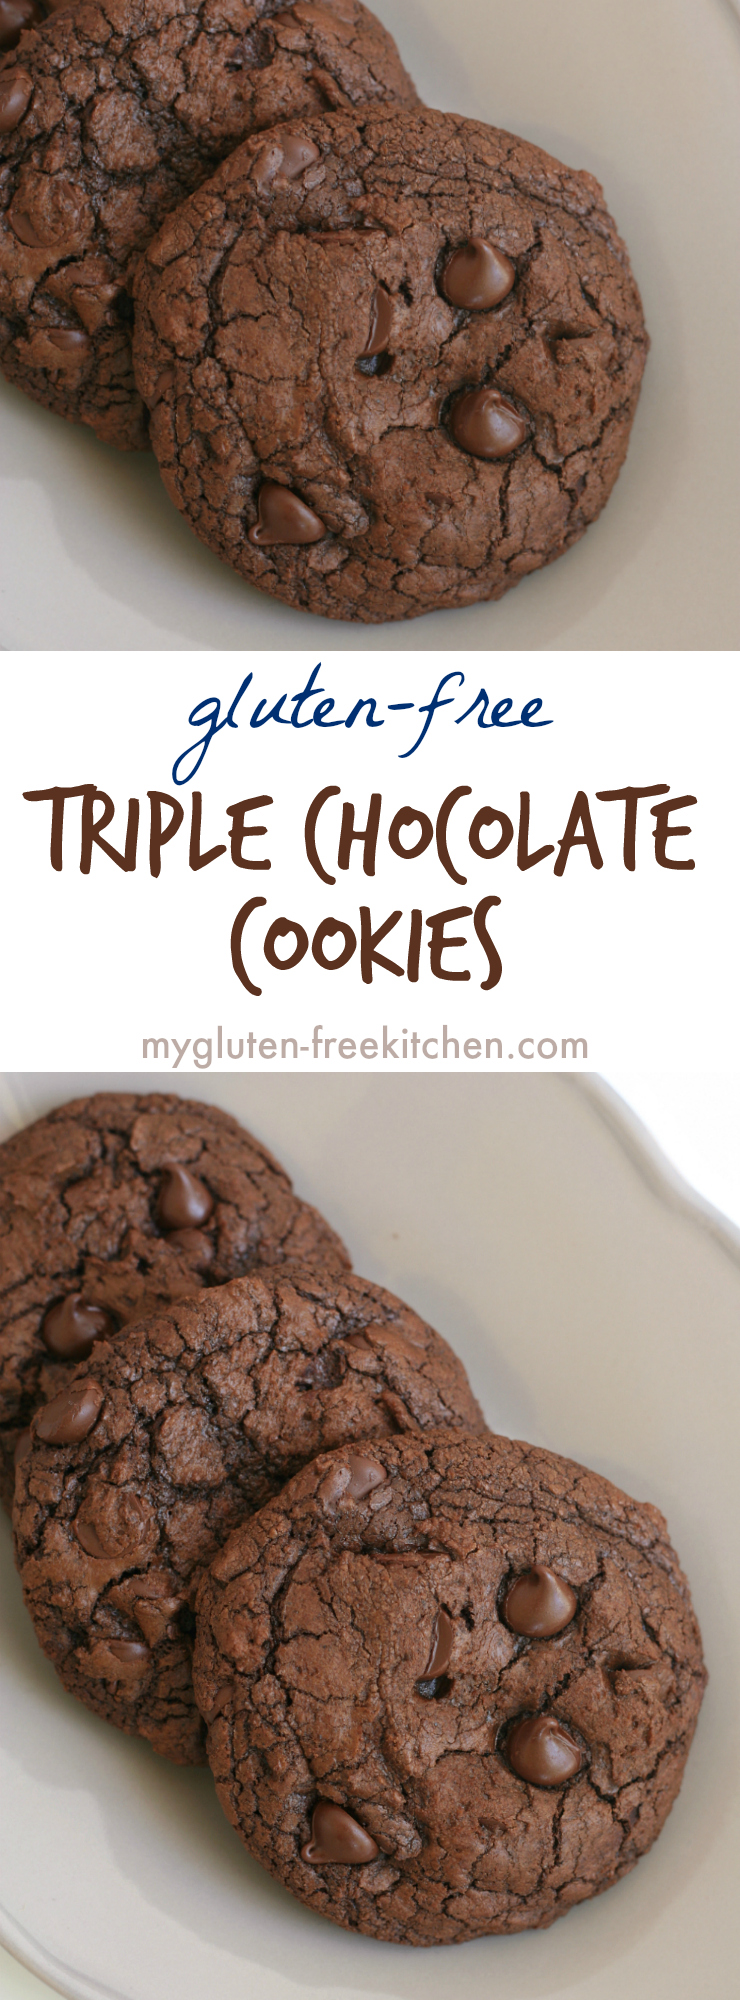 Gluten-free Triple Chocolate Cookies Recipe